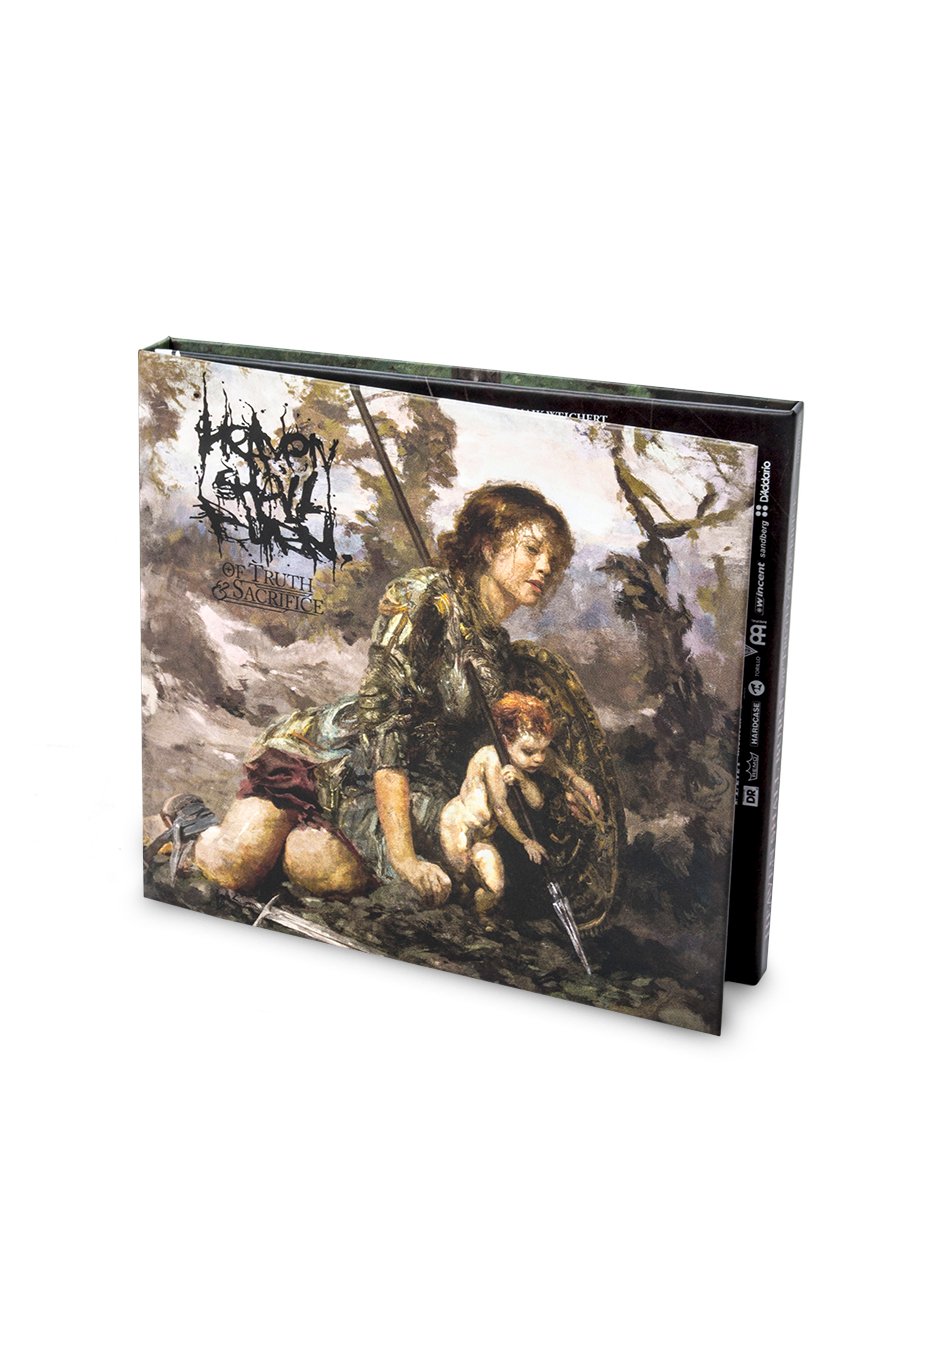 Heaven Shall Burn - Of Truth And Sacrifice Ltd. Edition Double Album - Mediabook 2 CD + DVD